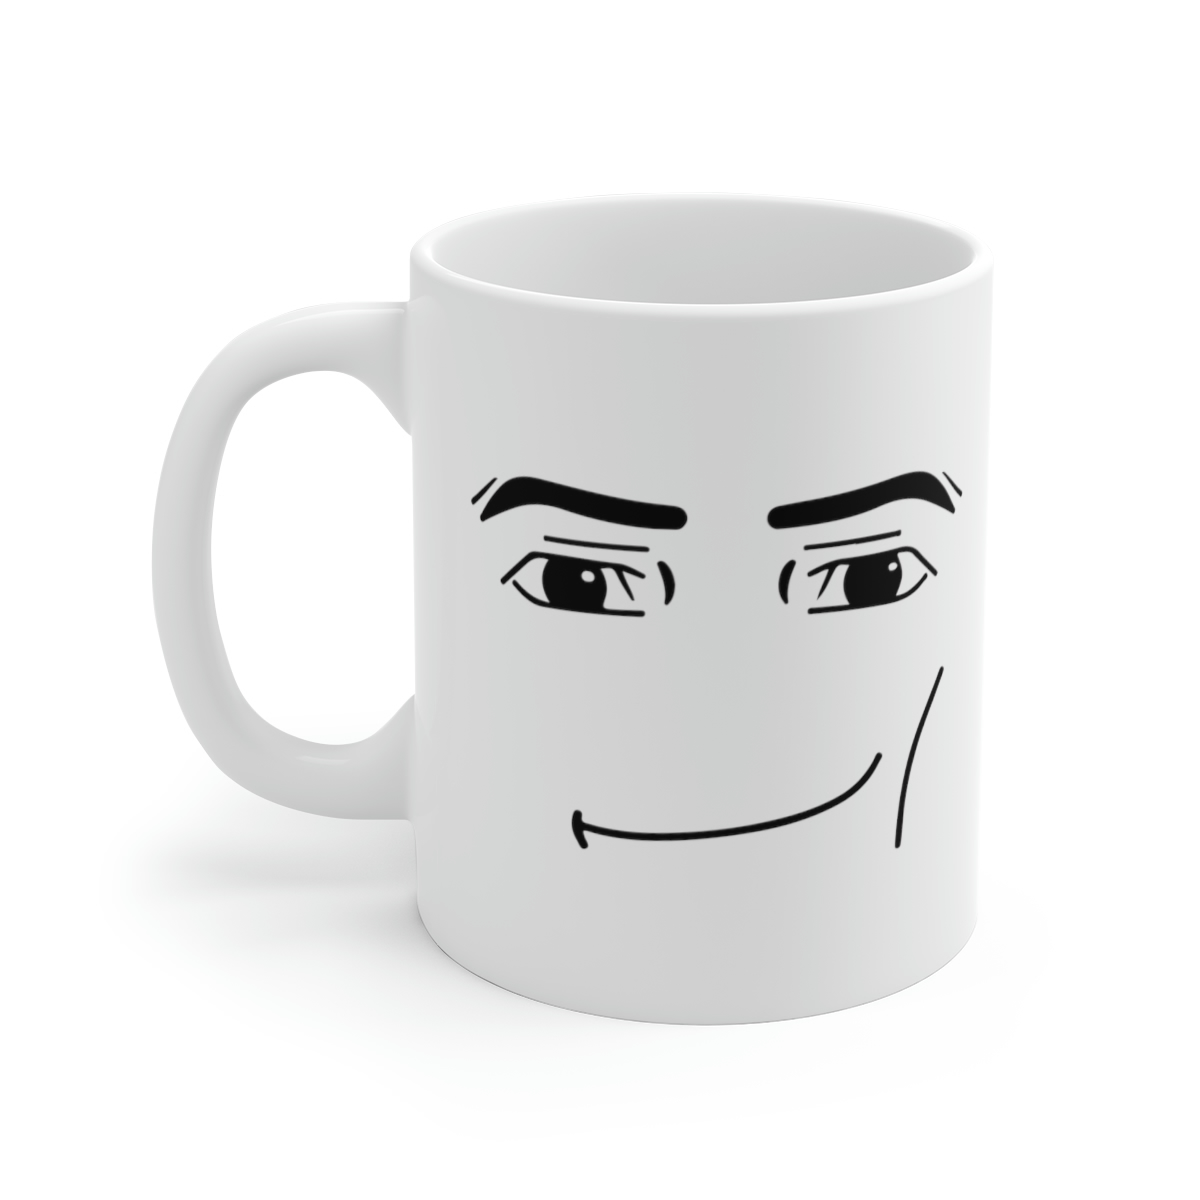 The manface mug is broken. - Imgflip